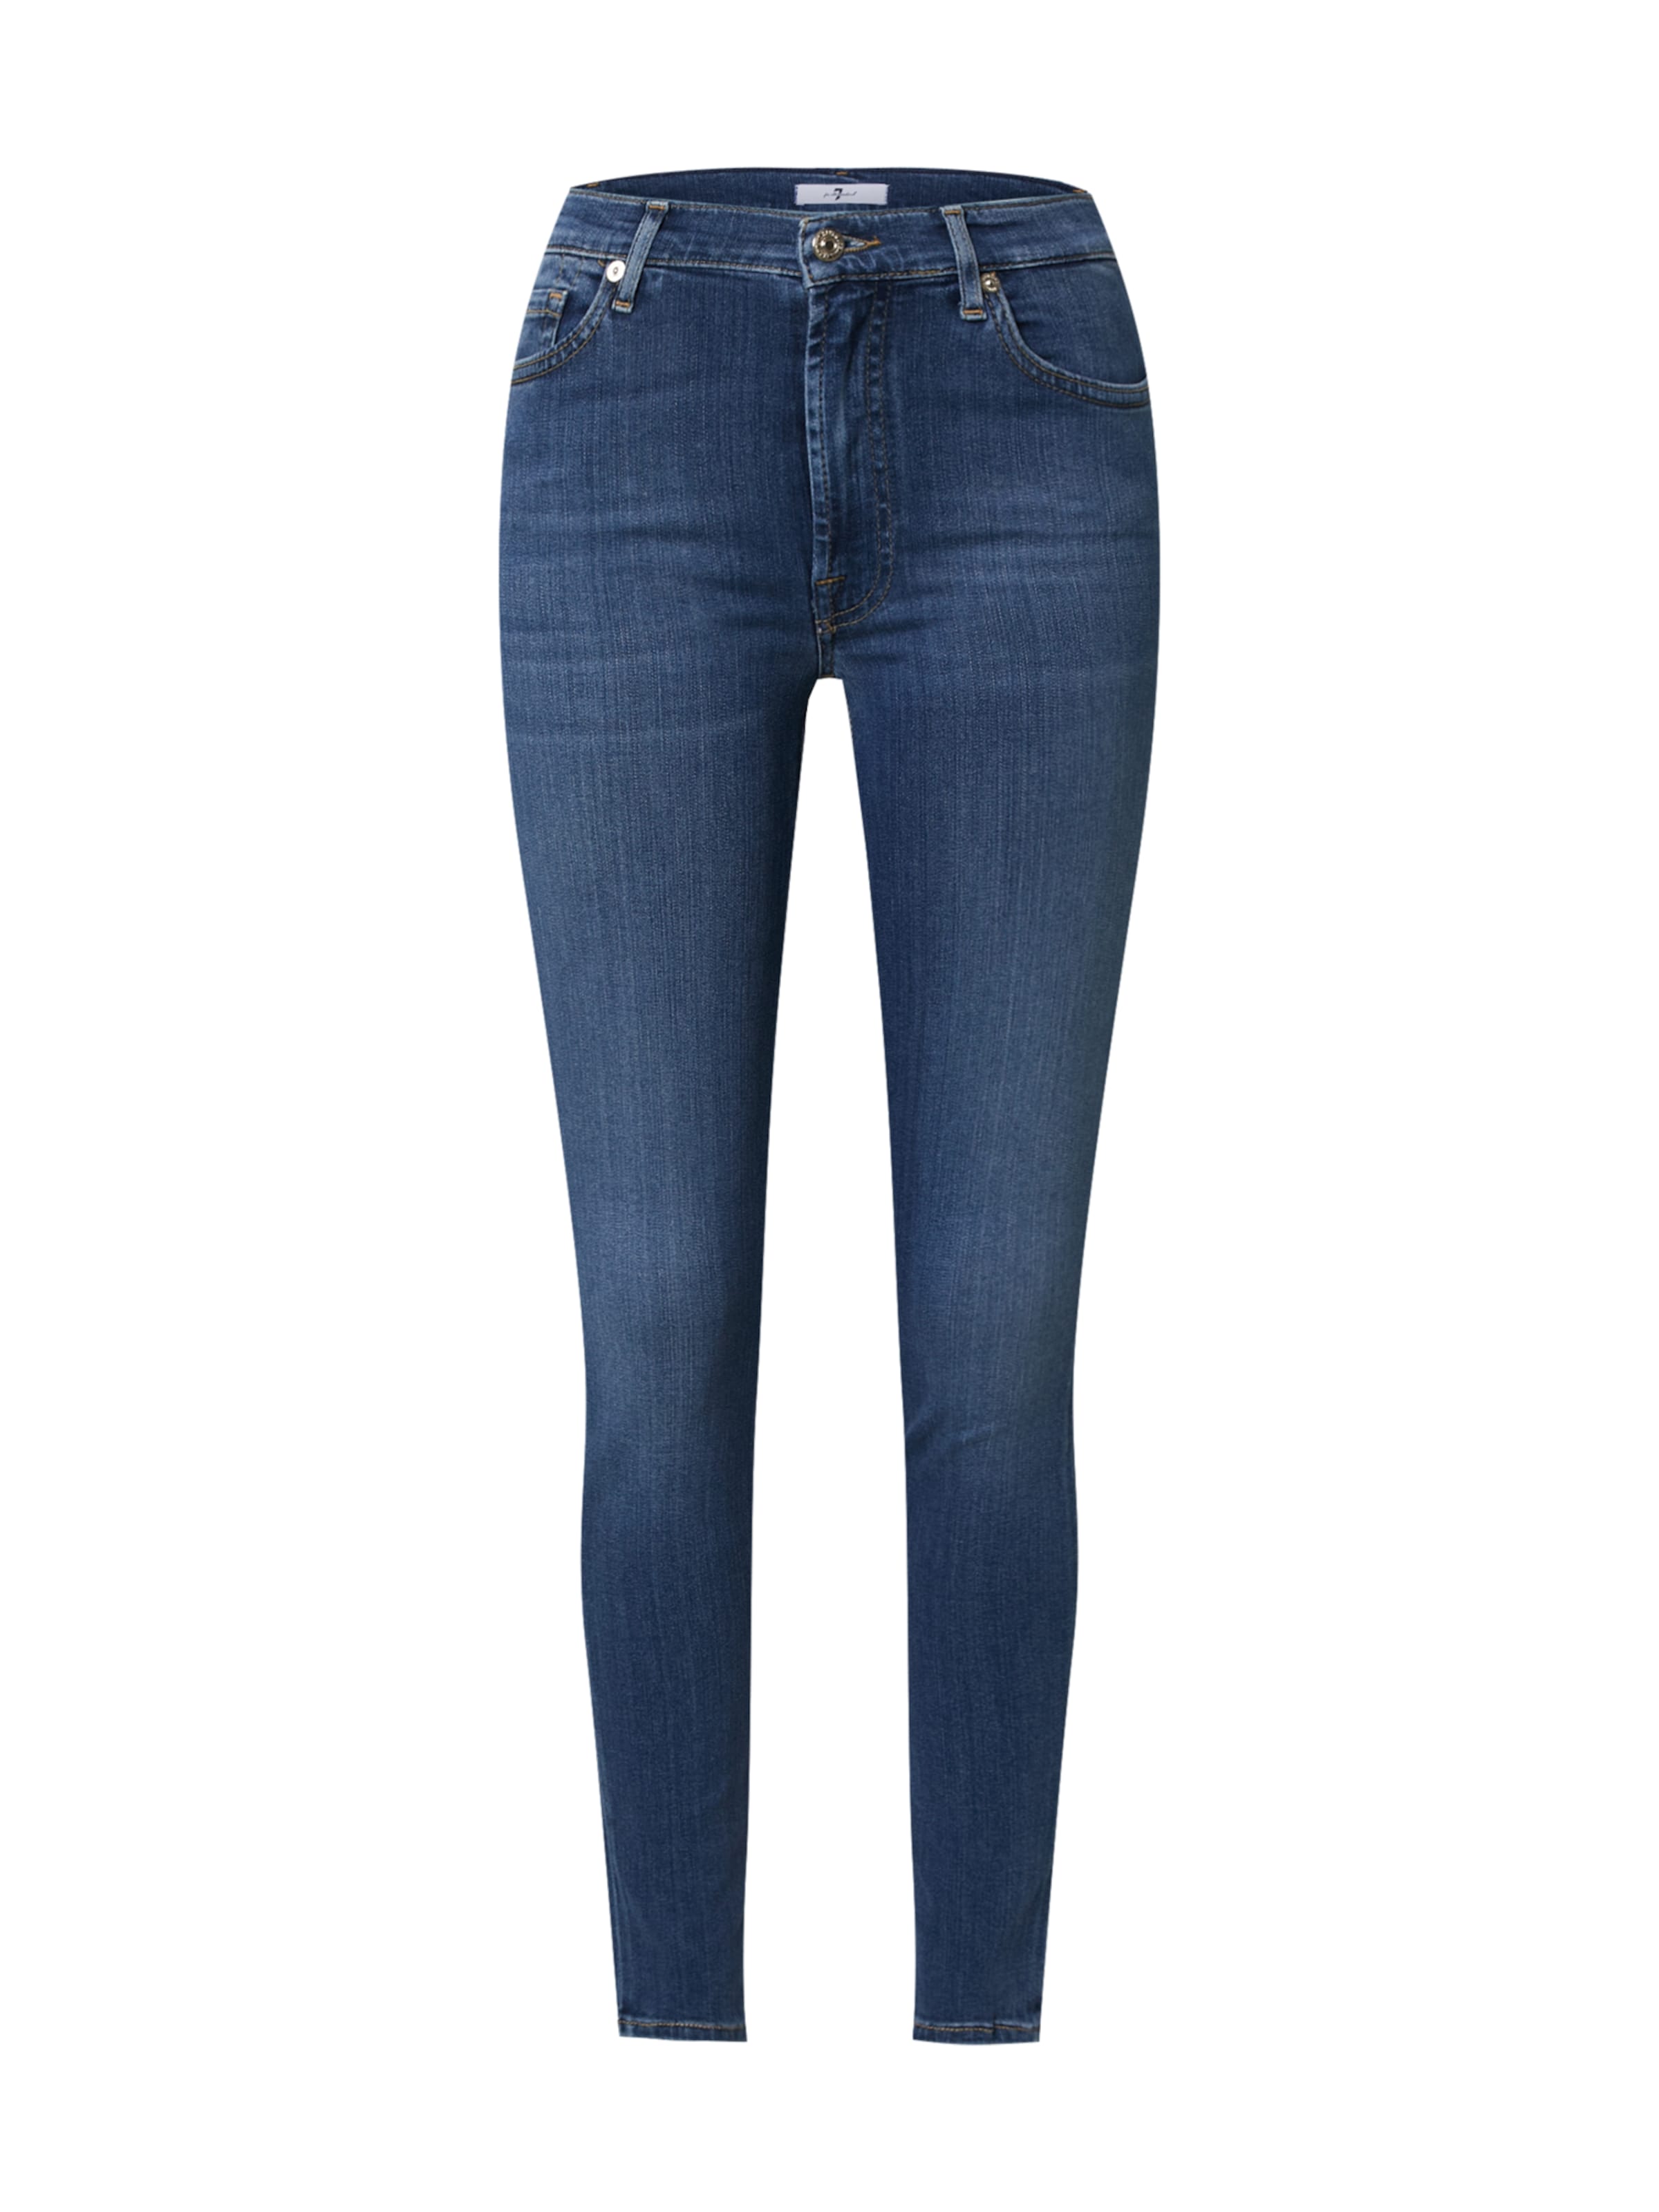 Jeans VIENNA ABOUT YOU Donna Abbigliamento Pantaloni e jeans Jeans Jeans skinny 